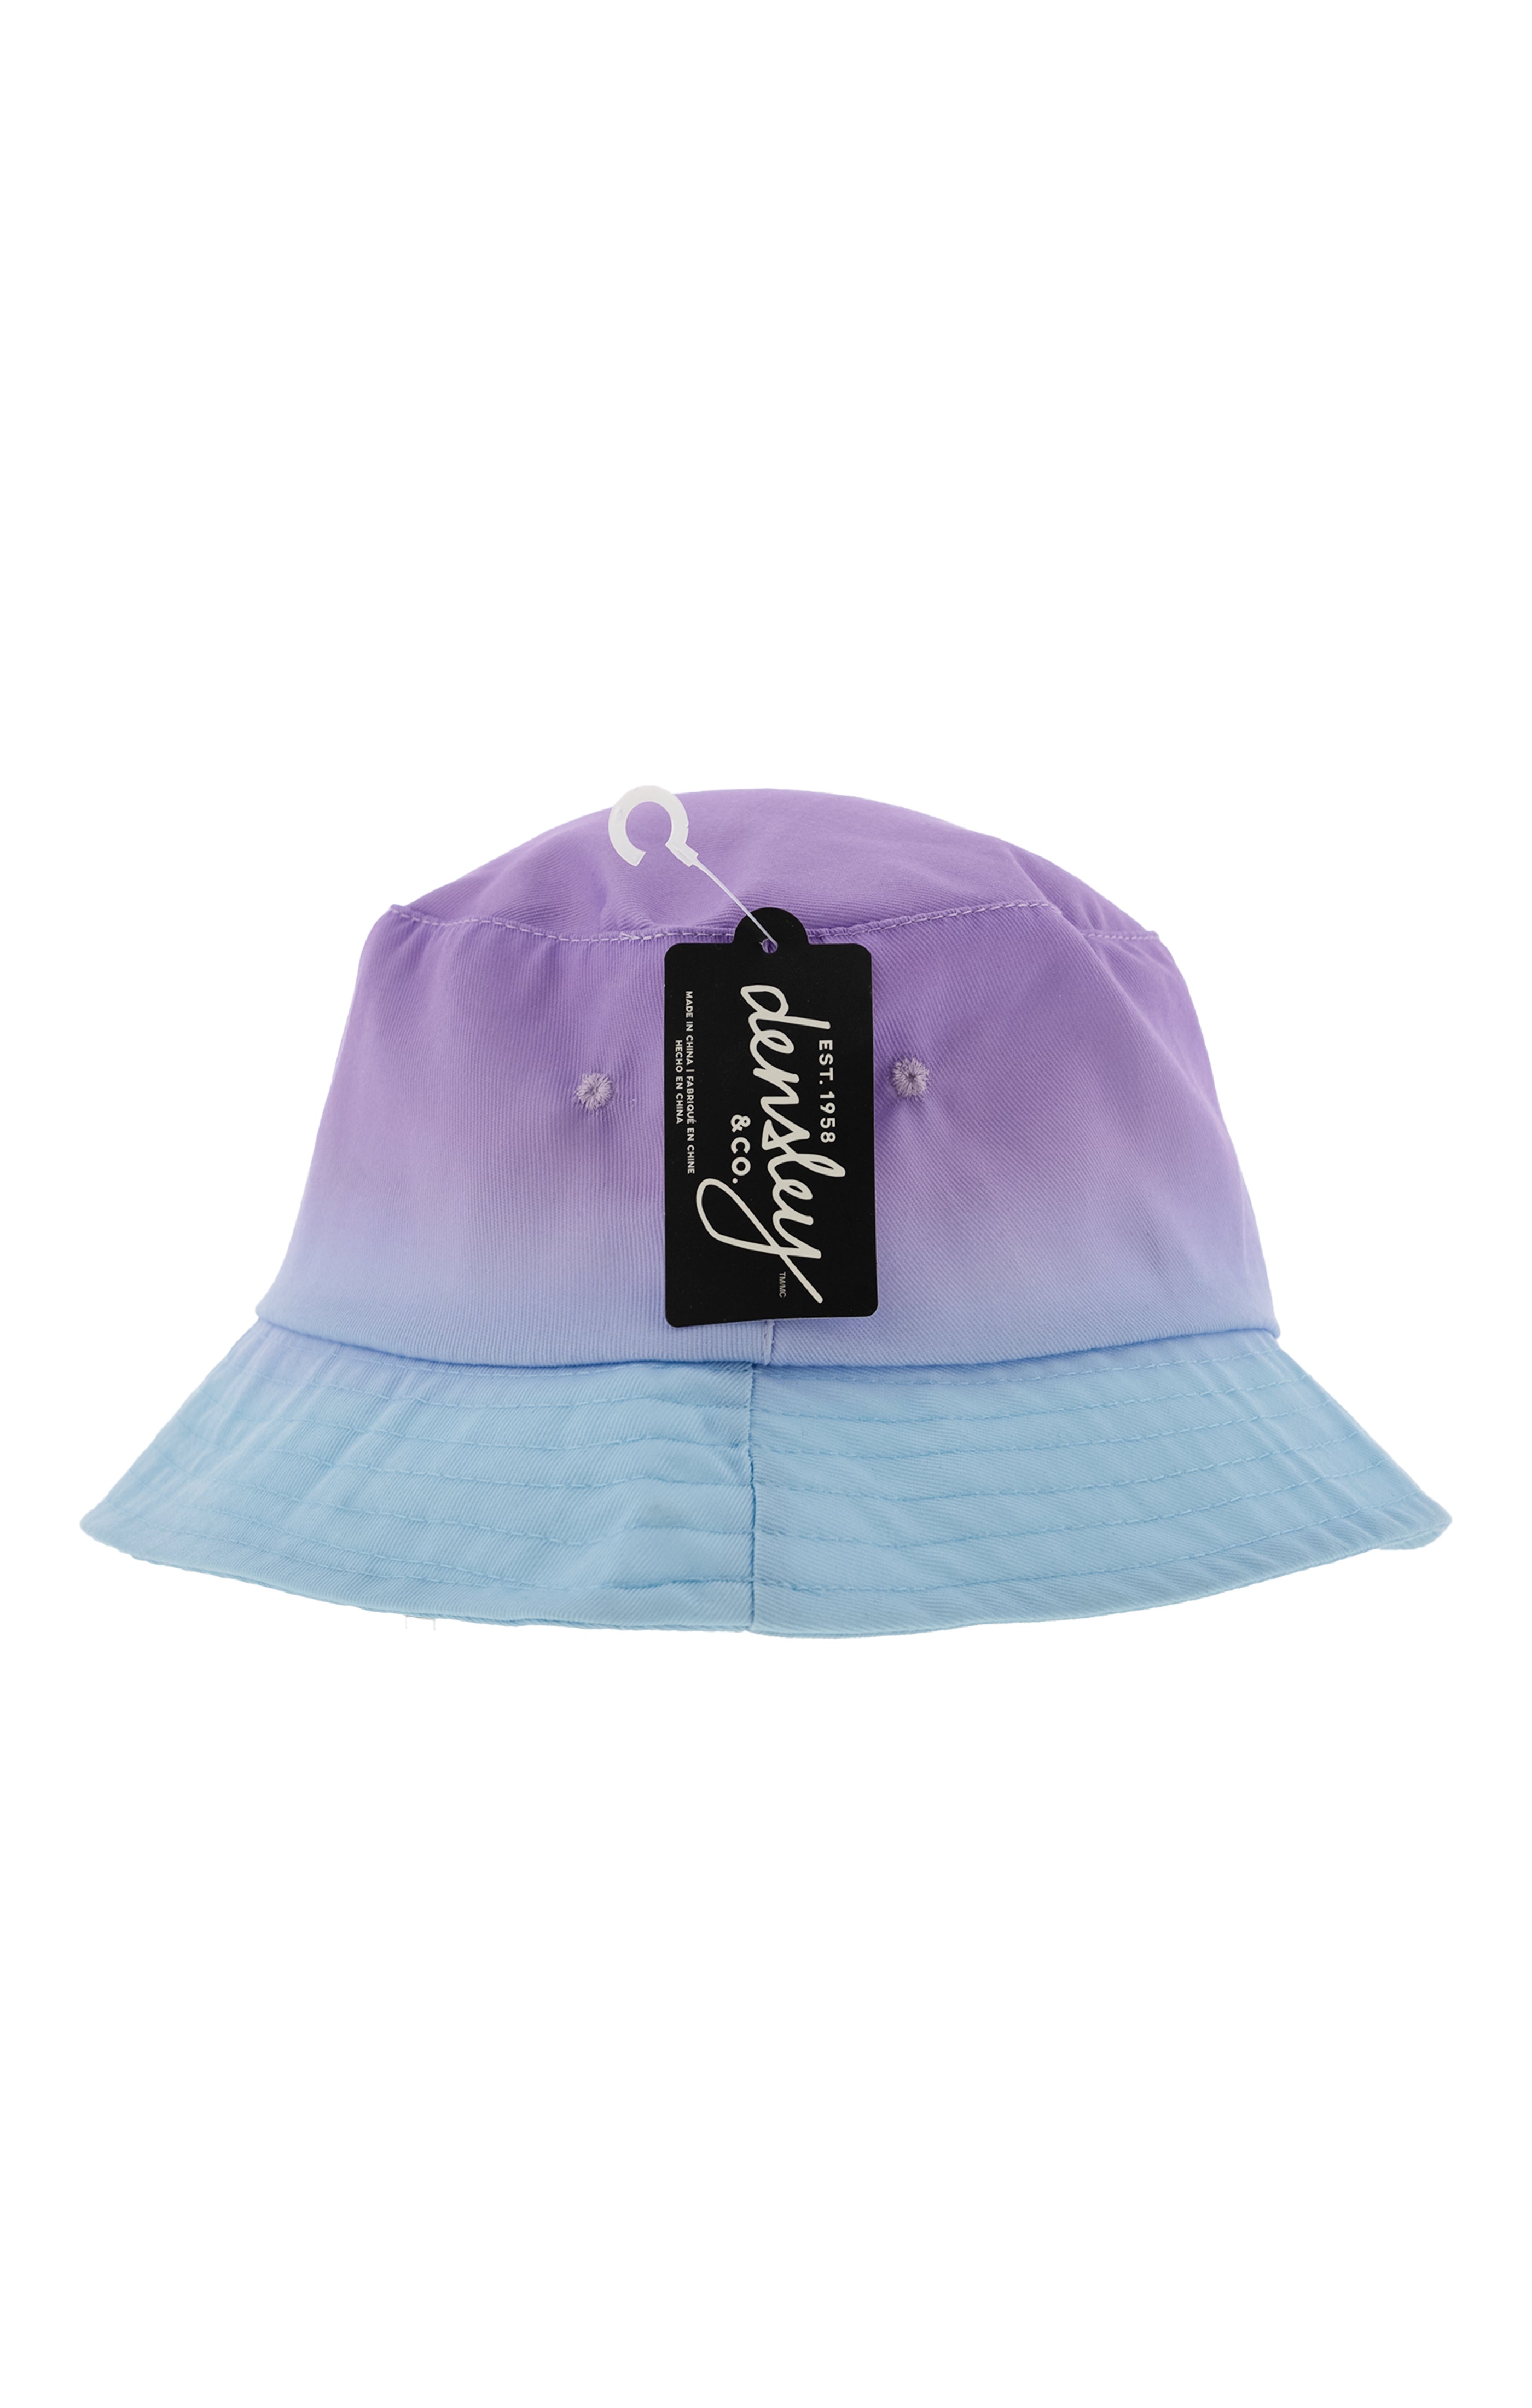 Adult Women's Ladies Summer Beach Bucket Hat